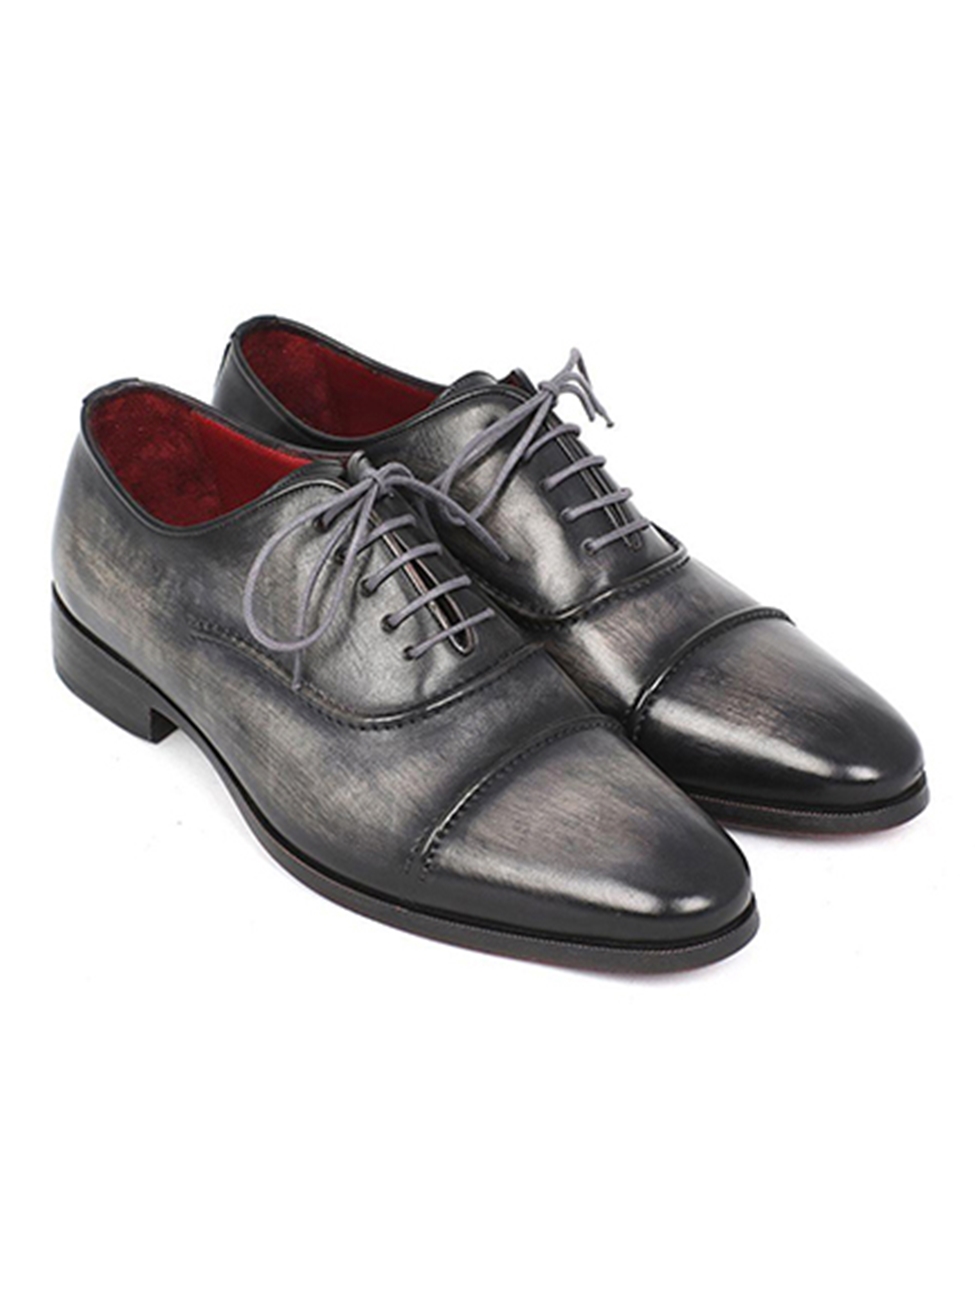 Black & Gray Captoe Fine Men's Oxford | Men's Oxford Shoes Collection ...